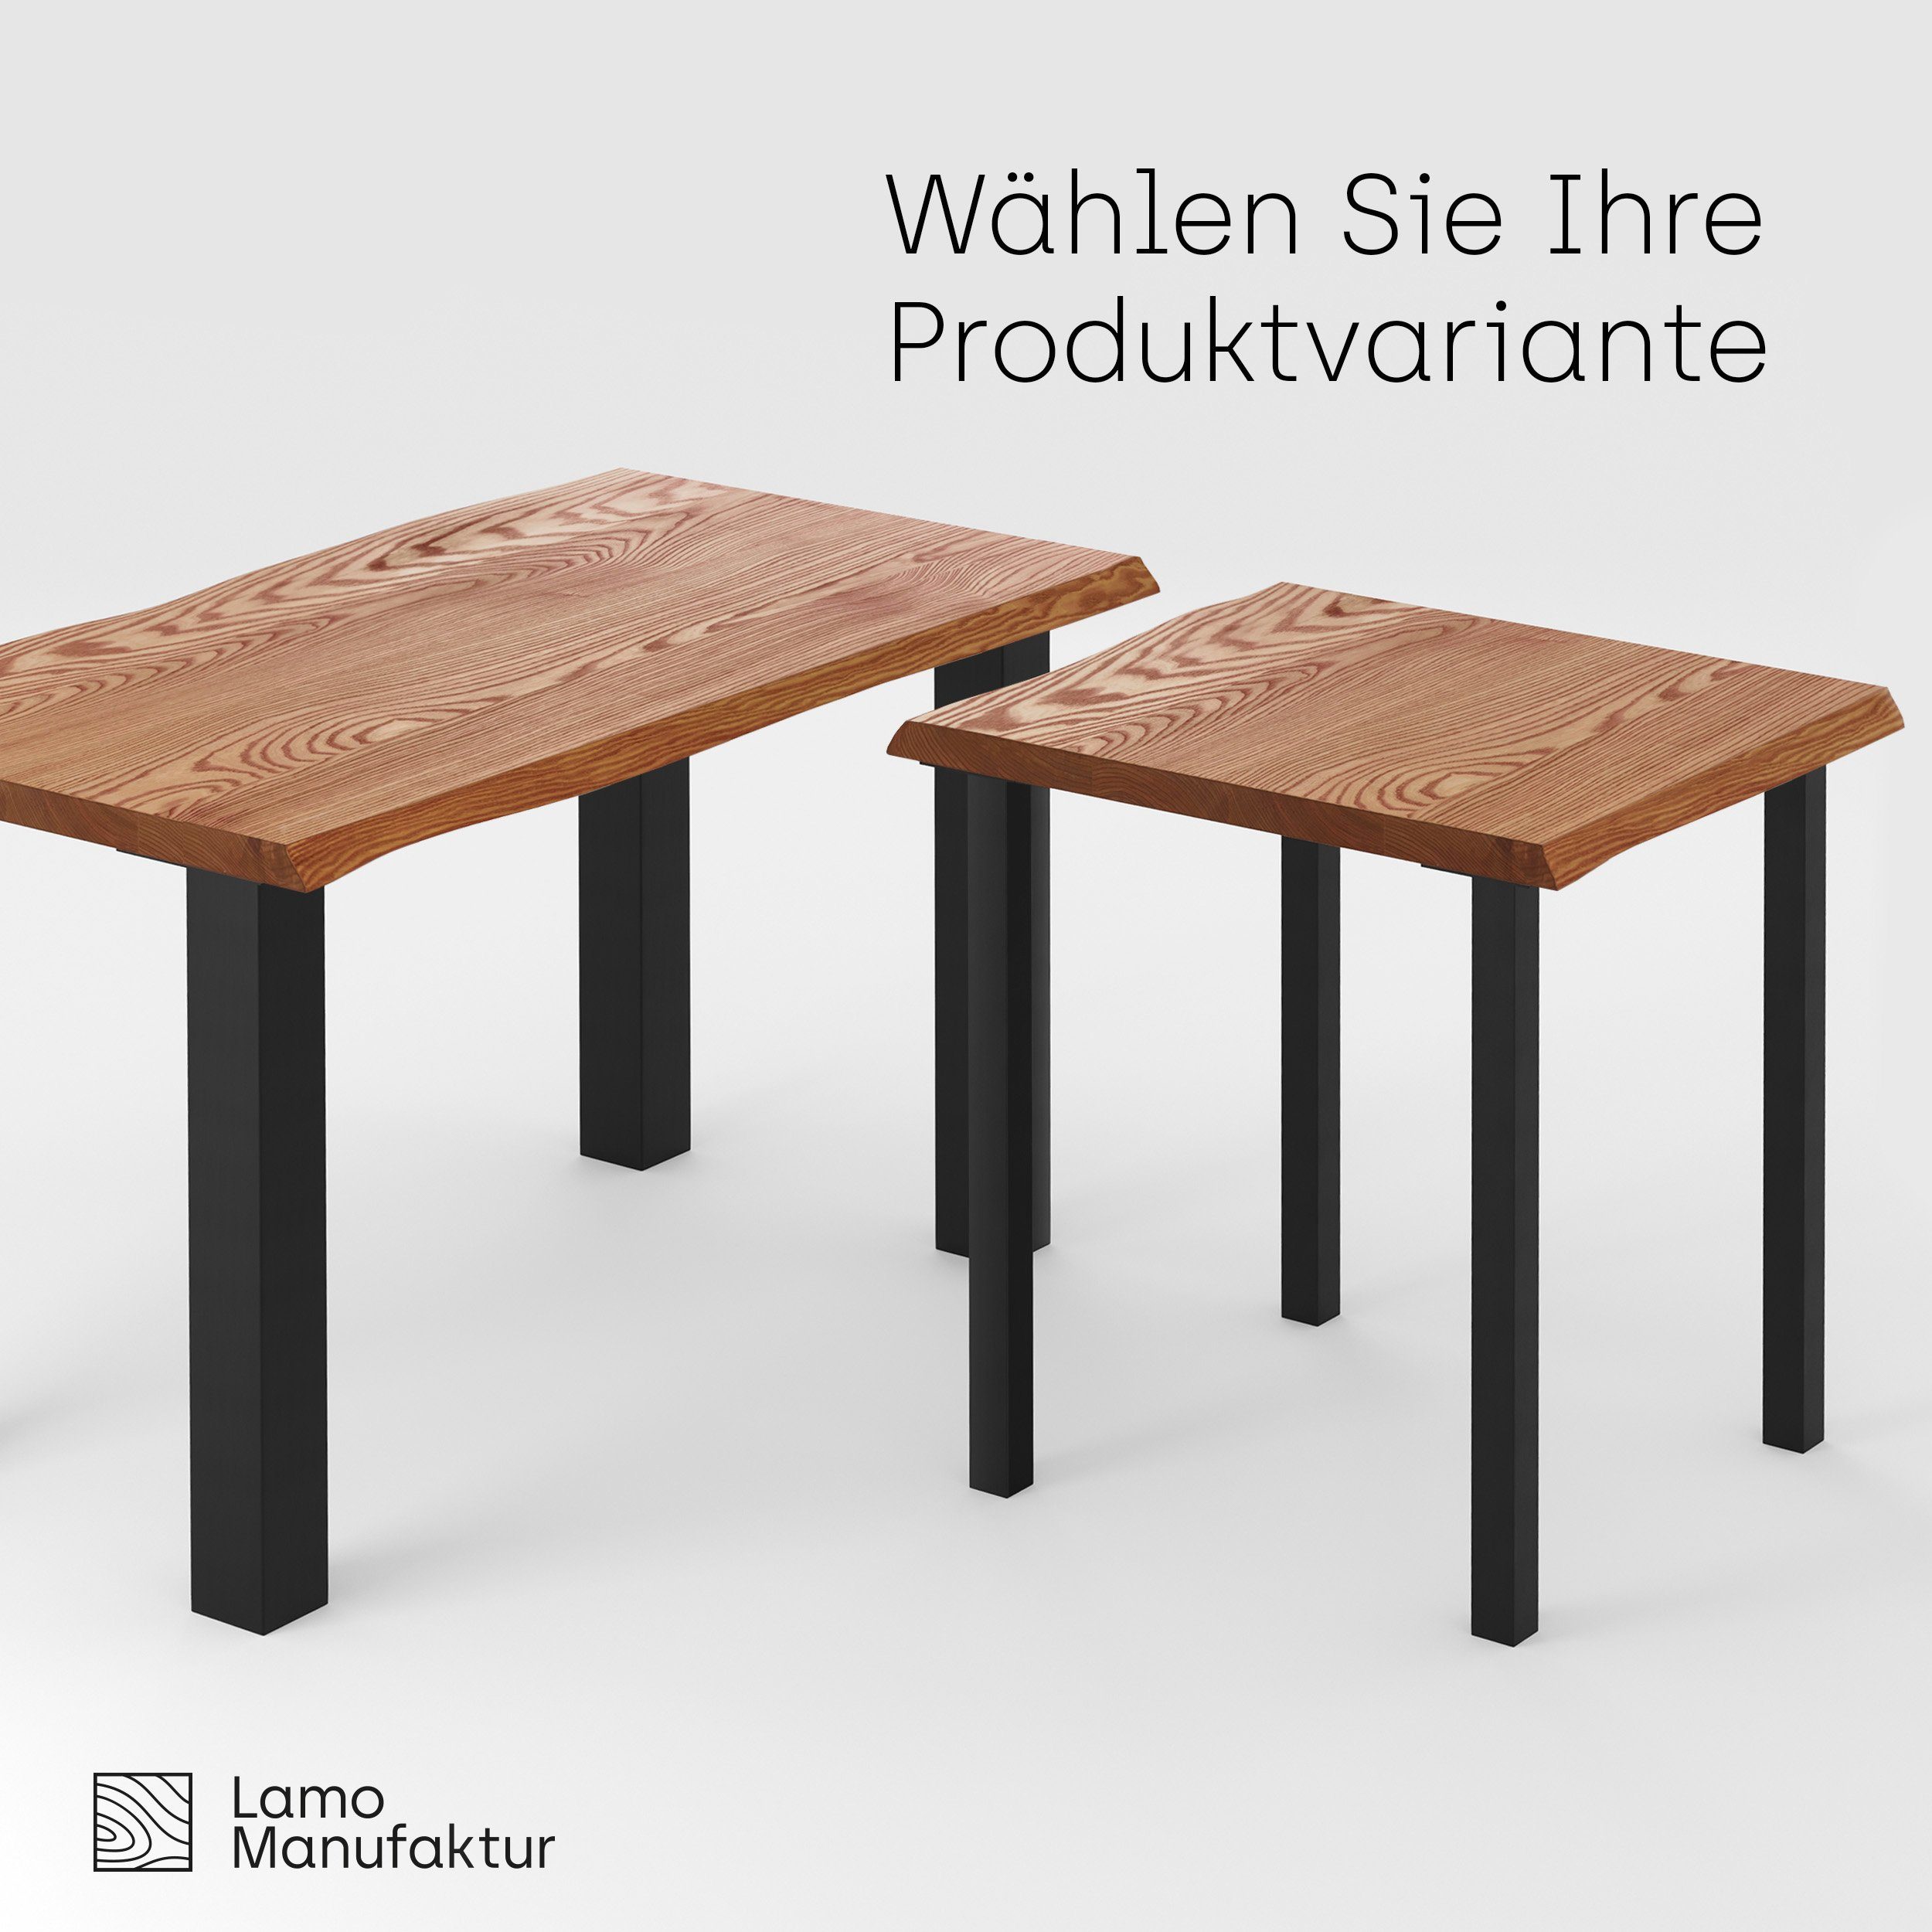 Esstisch Classic LAMO Weiß Manufaktur | (1 Rustikal massiv Tisch), Metallgestell inkl. Baumkante Baumkantentisch Massivholz